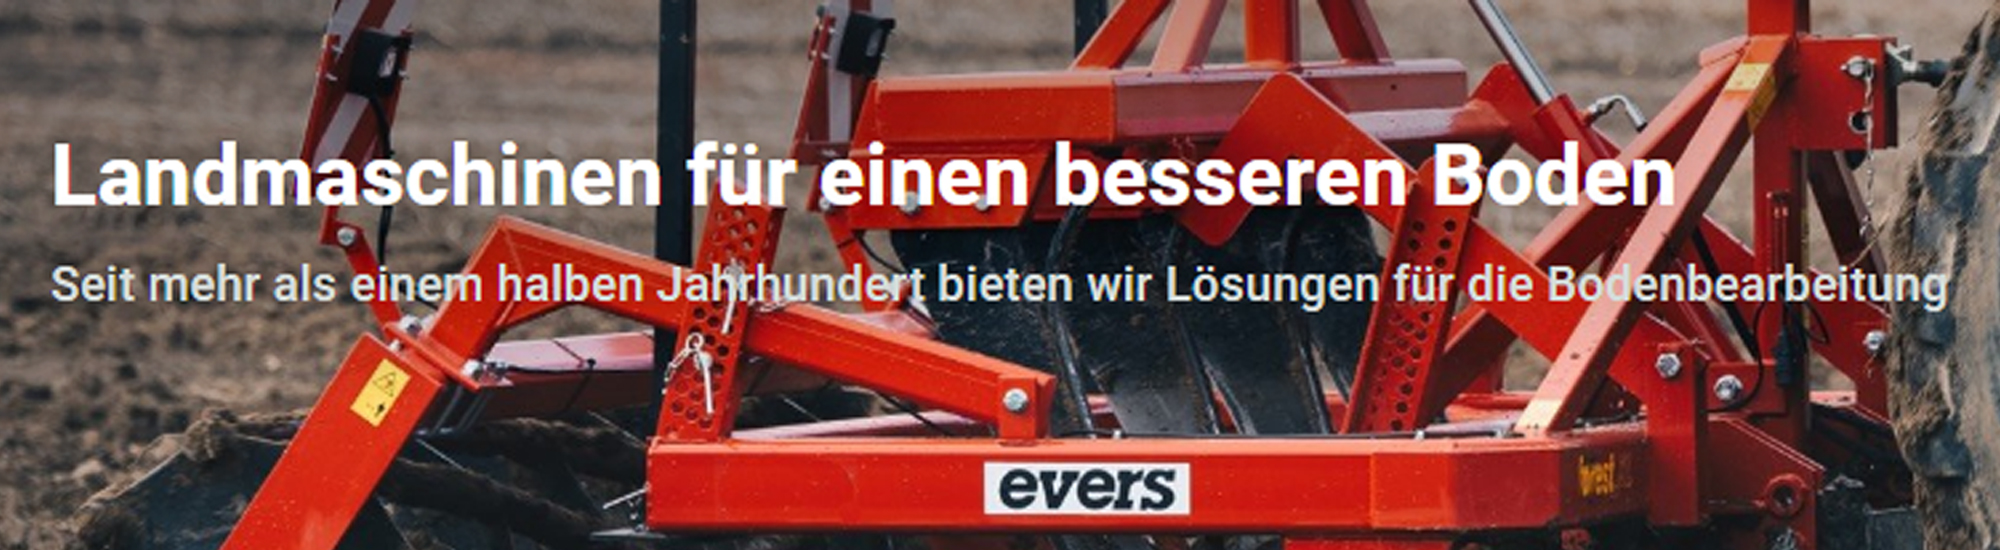 Evers Landtechnik GmbH & Co. KG